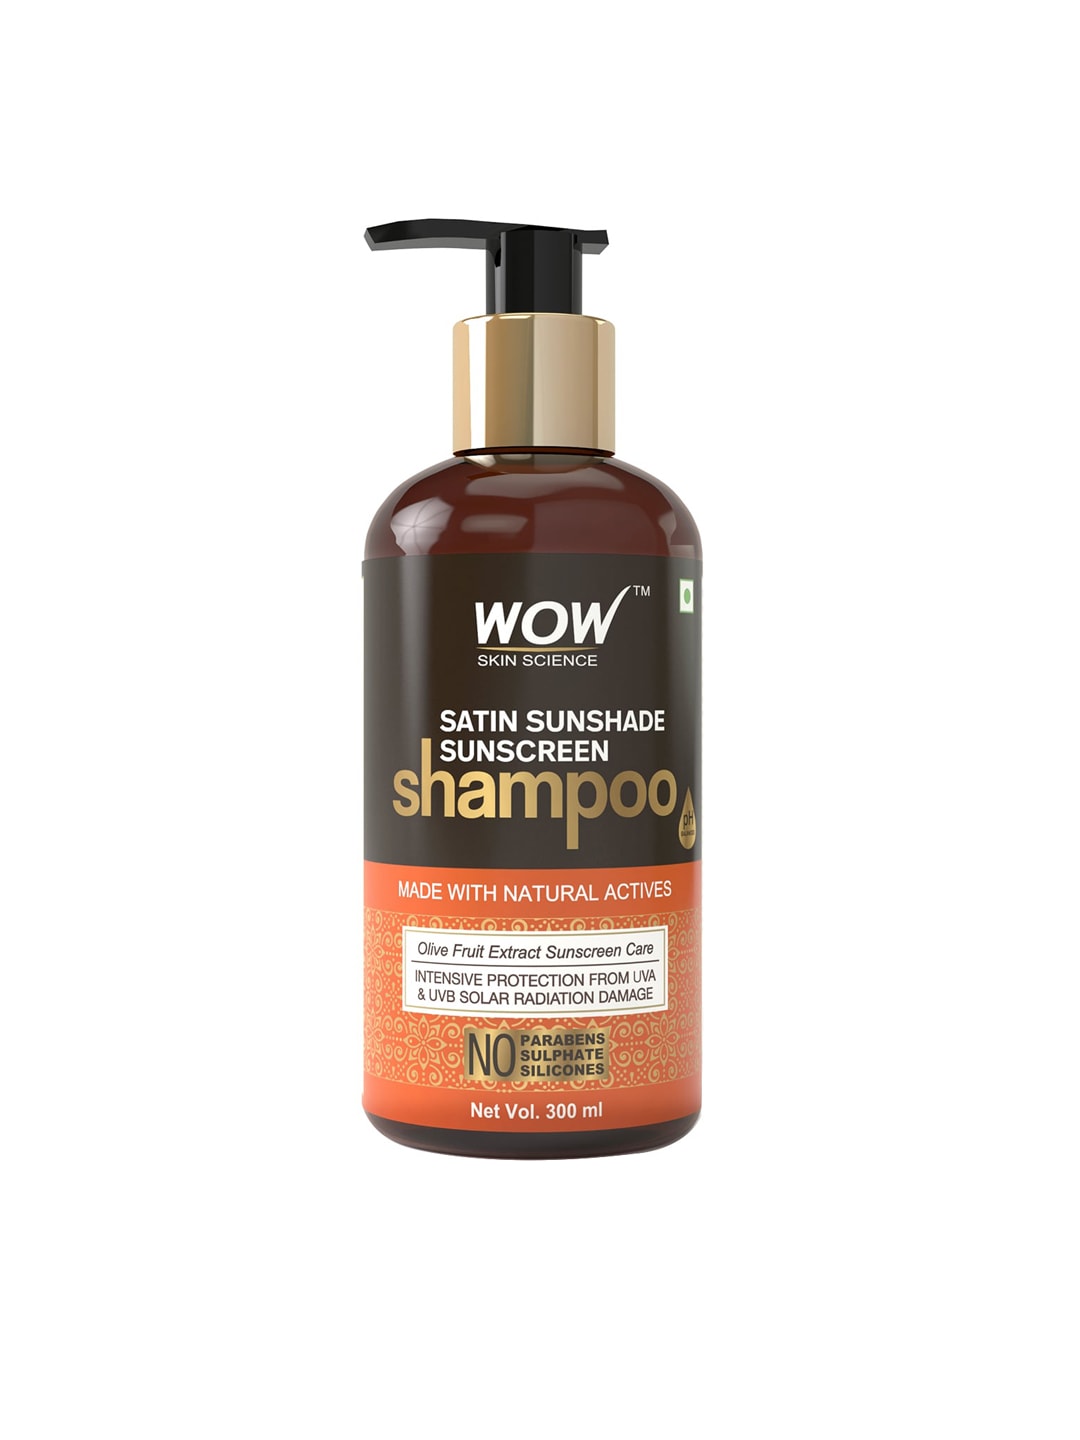 WOW Skin Science Unisex Satin Sunshade Sunscreen Shampoo 300ml Price in India